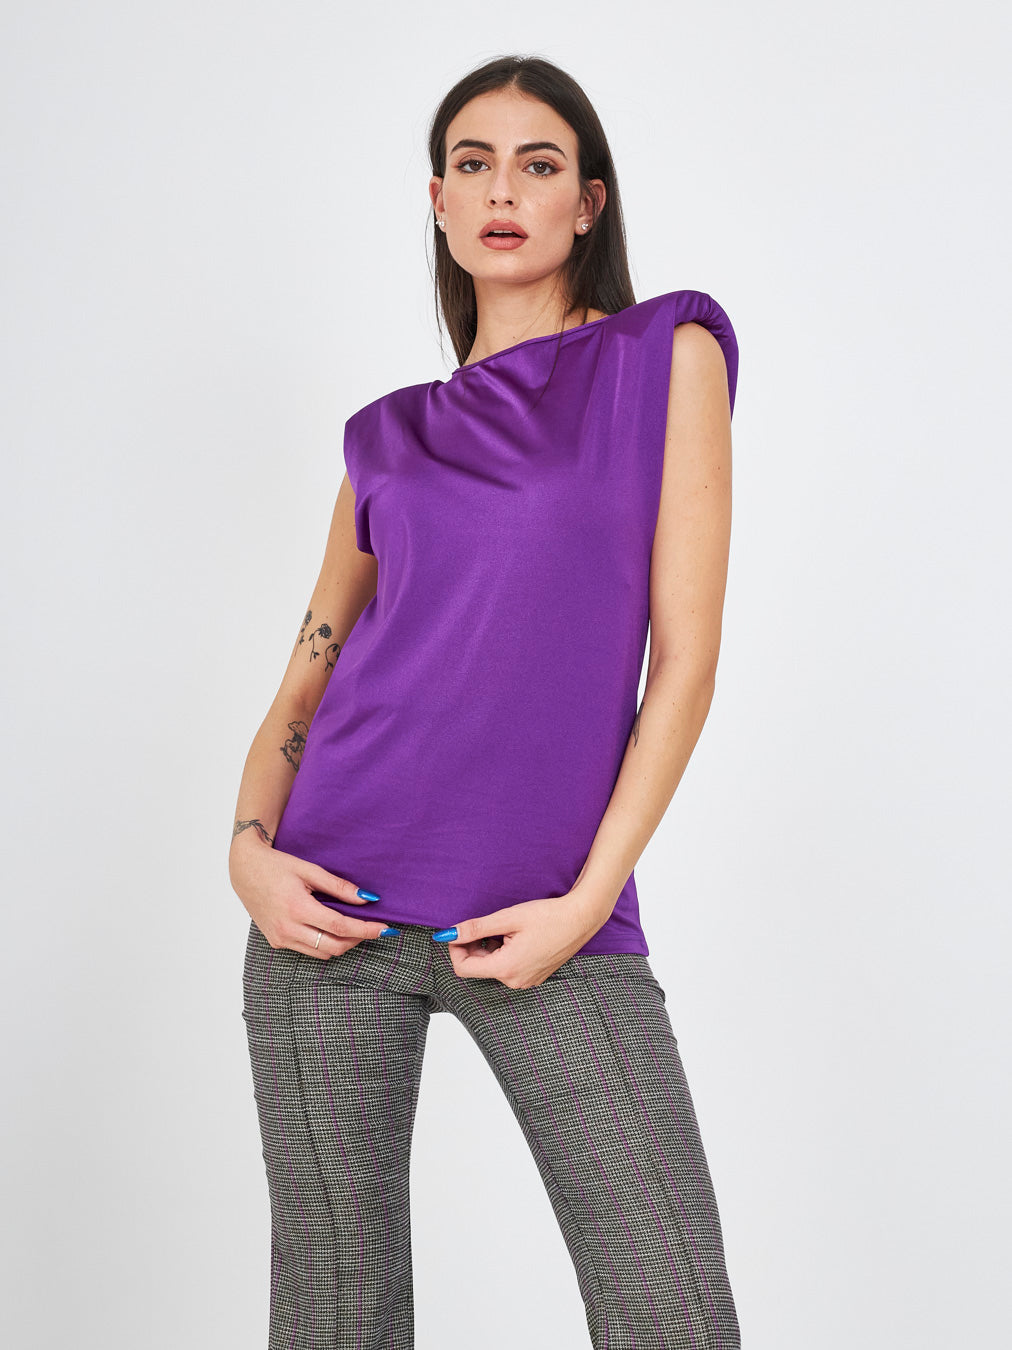 District Margherita Mazzei t-shirt with purple shoulder pads